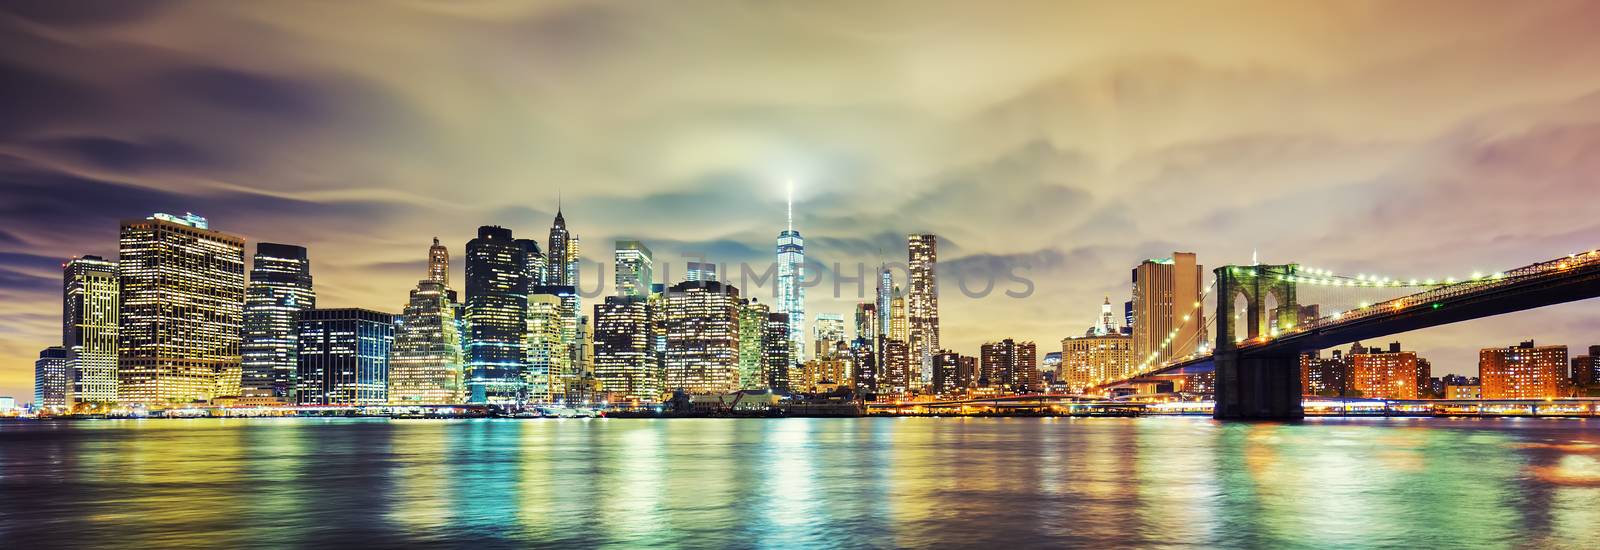 Panoramic view of Manhattan at night by vwalakte